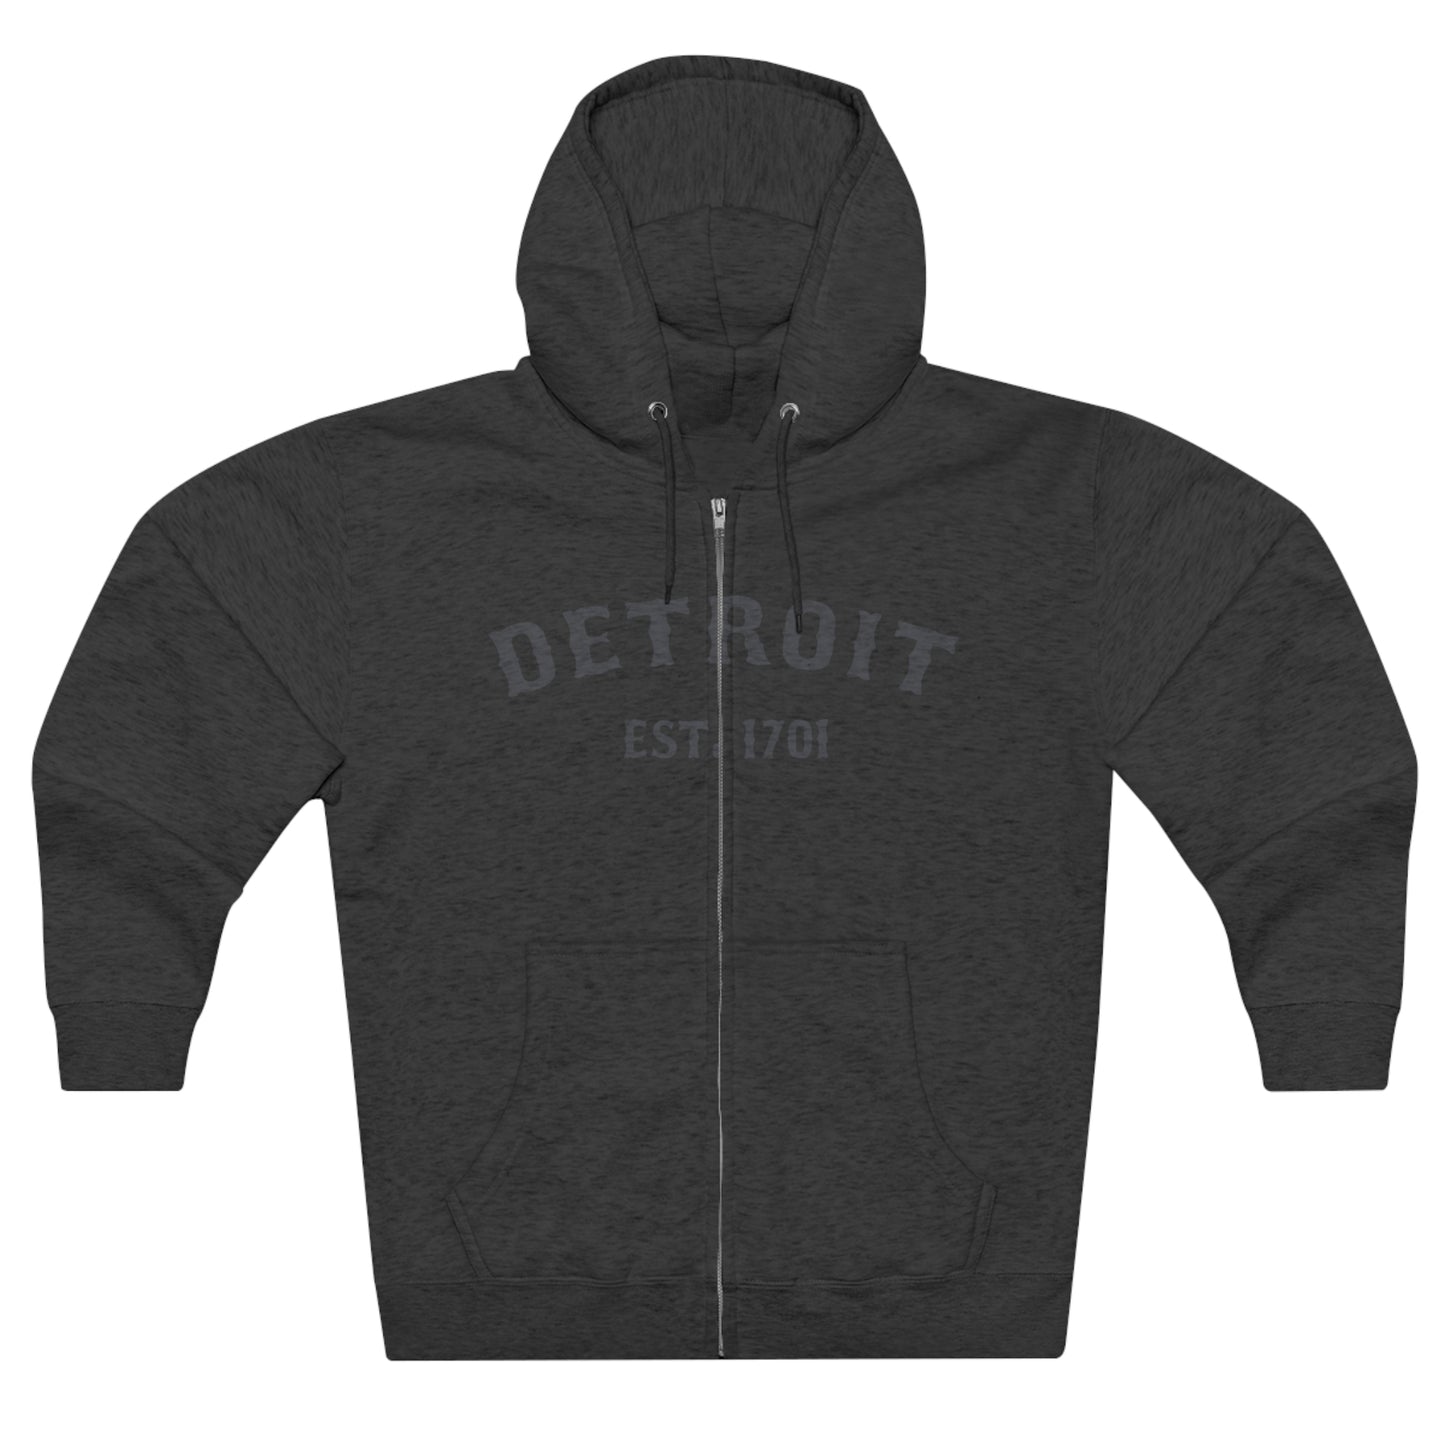 'Detroit EST. 1701' Hoodie (Iron Ore Grey Ballpark Font) | Unisex Full Zip